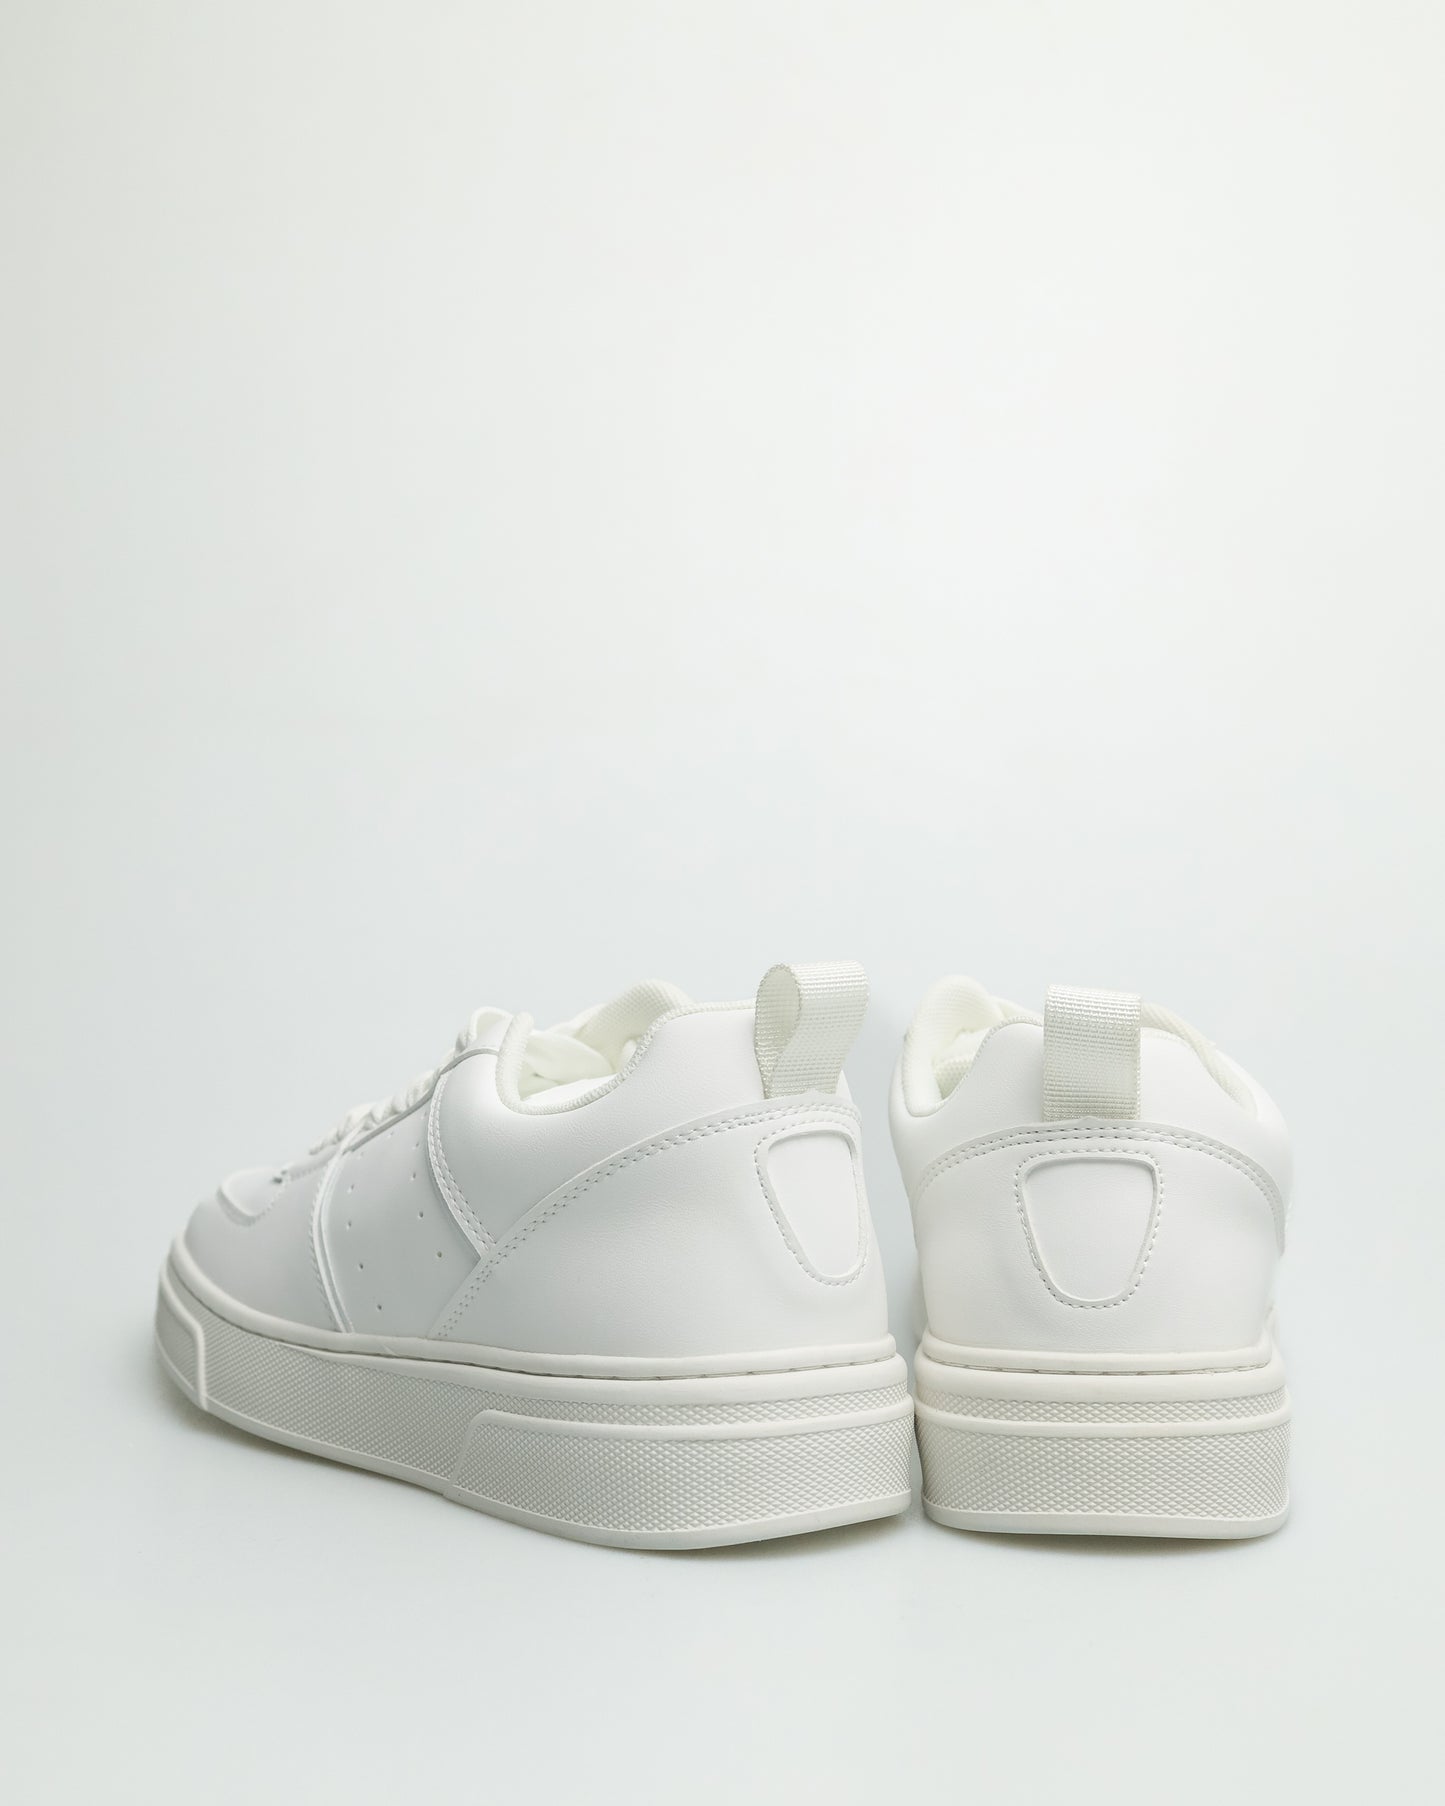 Tomaz TY017 Men's Sneakers (White)